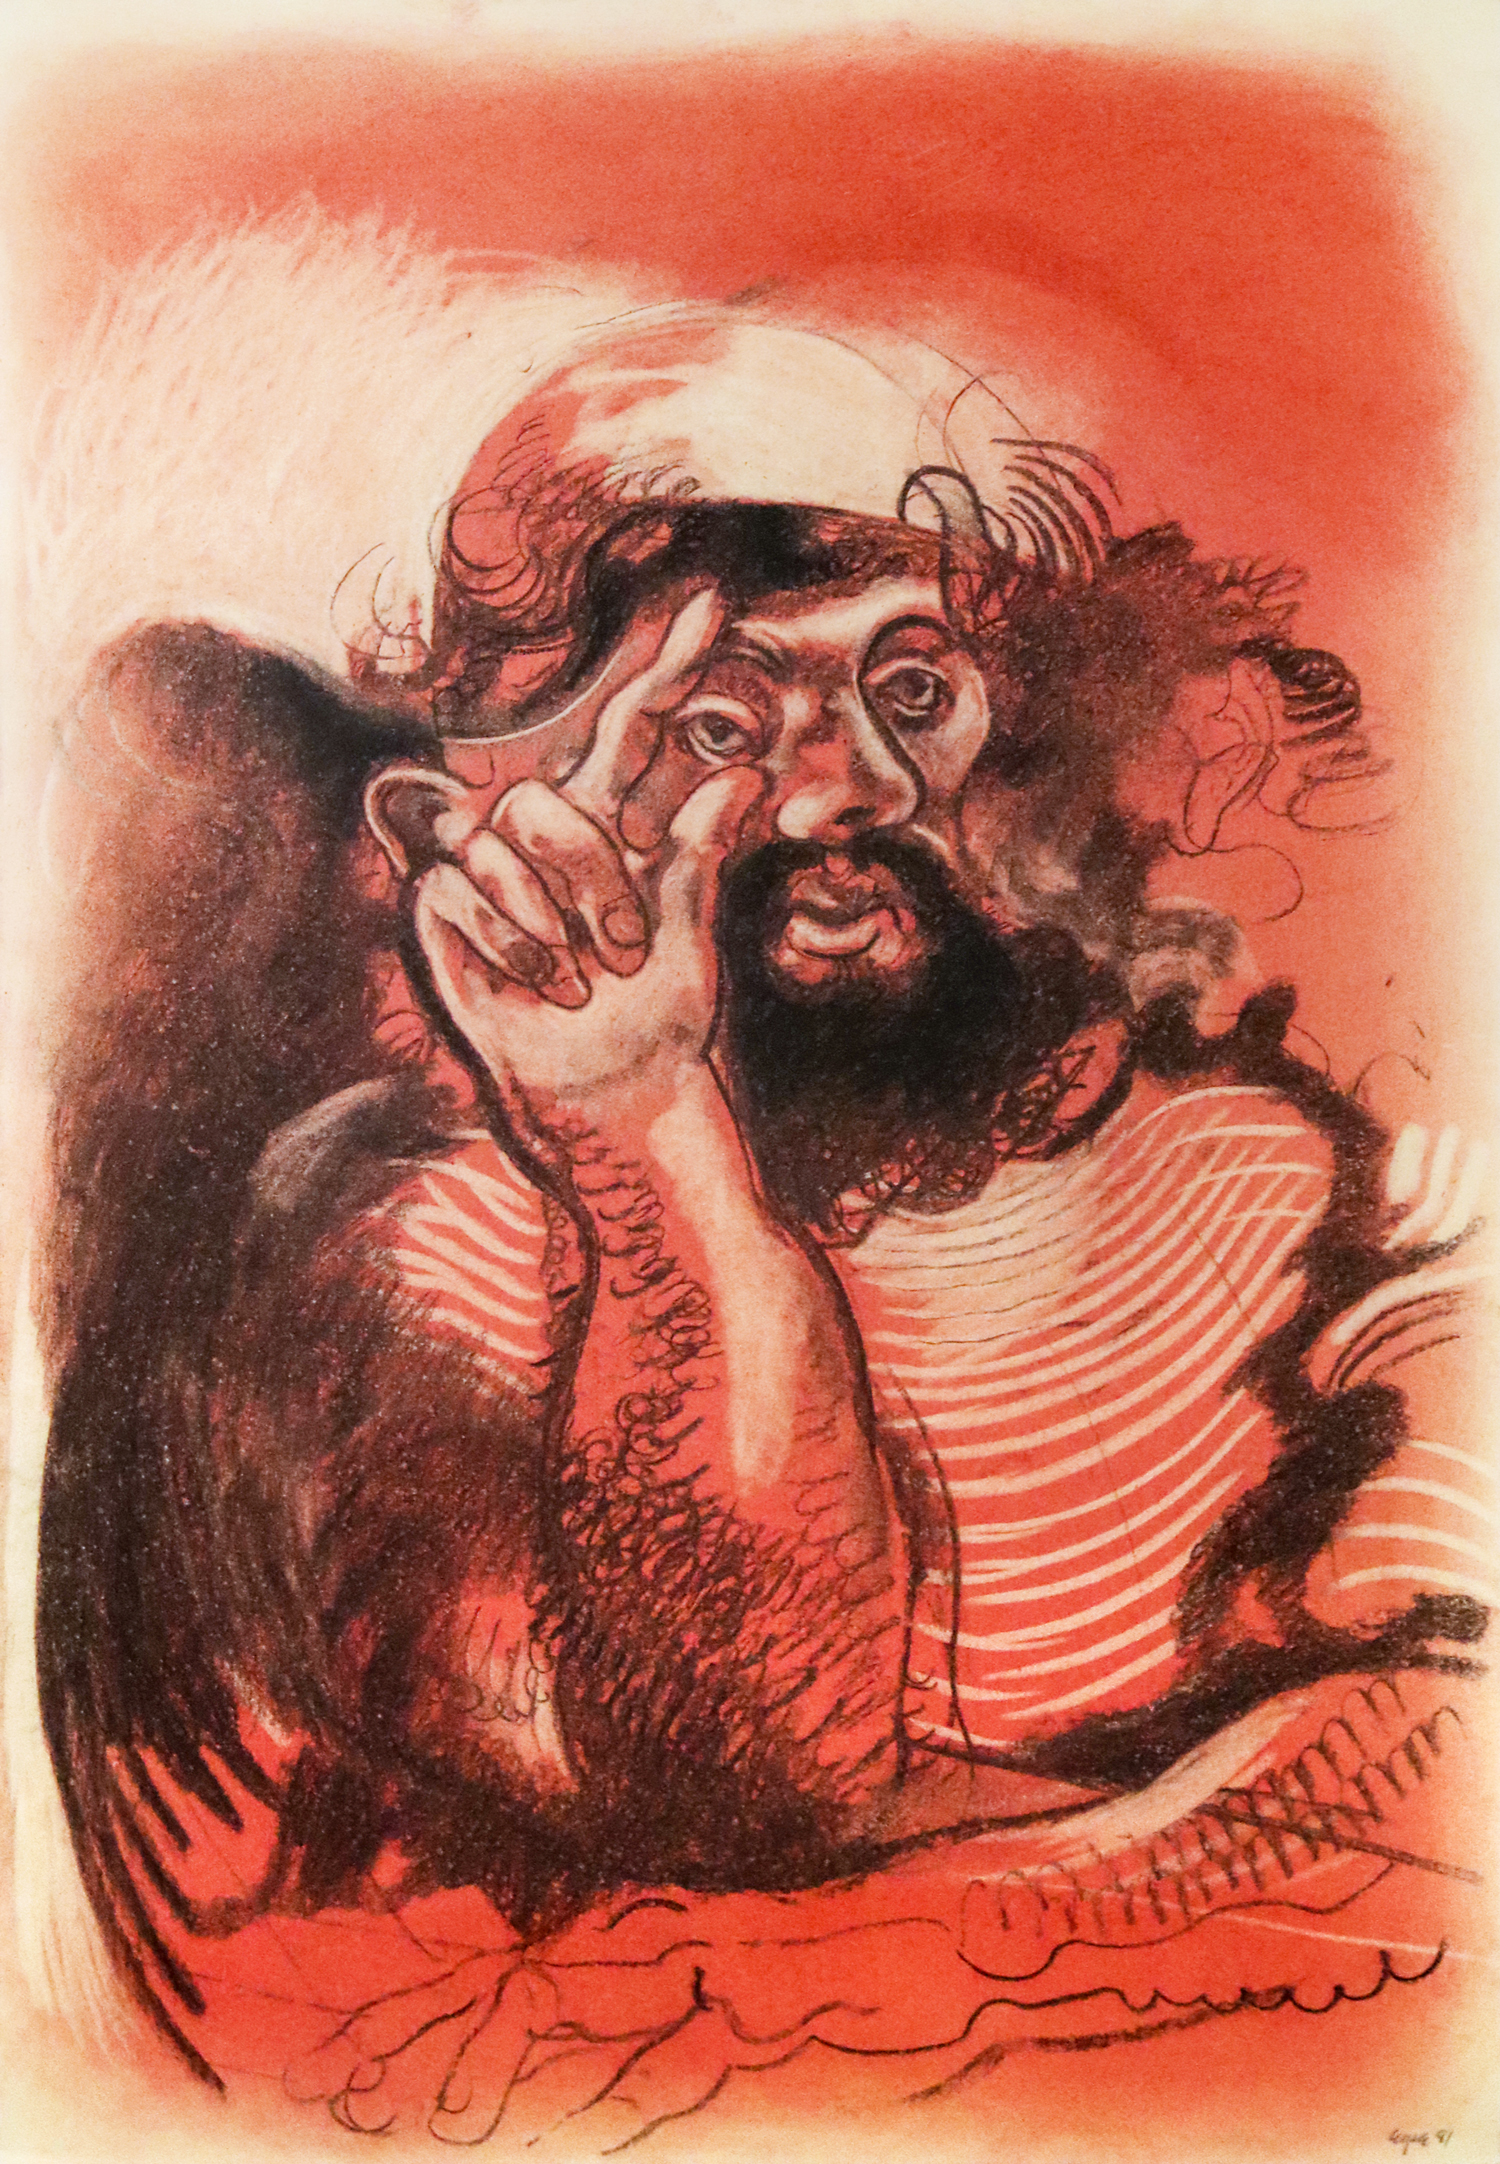 Ivan Eyre, Untitled, 1981, Crayon on paper, 75.7 x 53.1 cm, Collection of the Pavilion, Assiniboine Park Conservancy